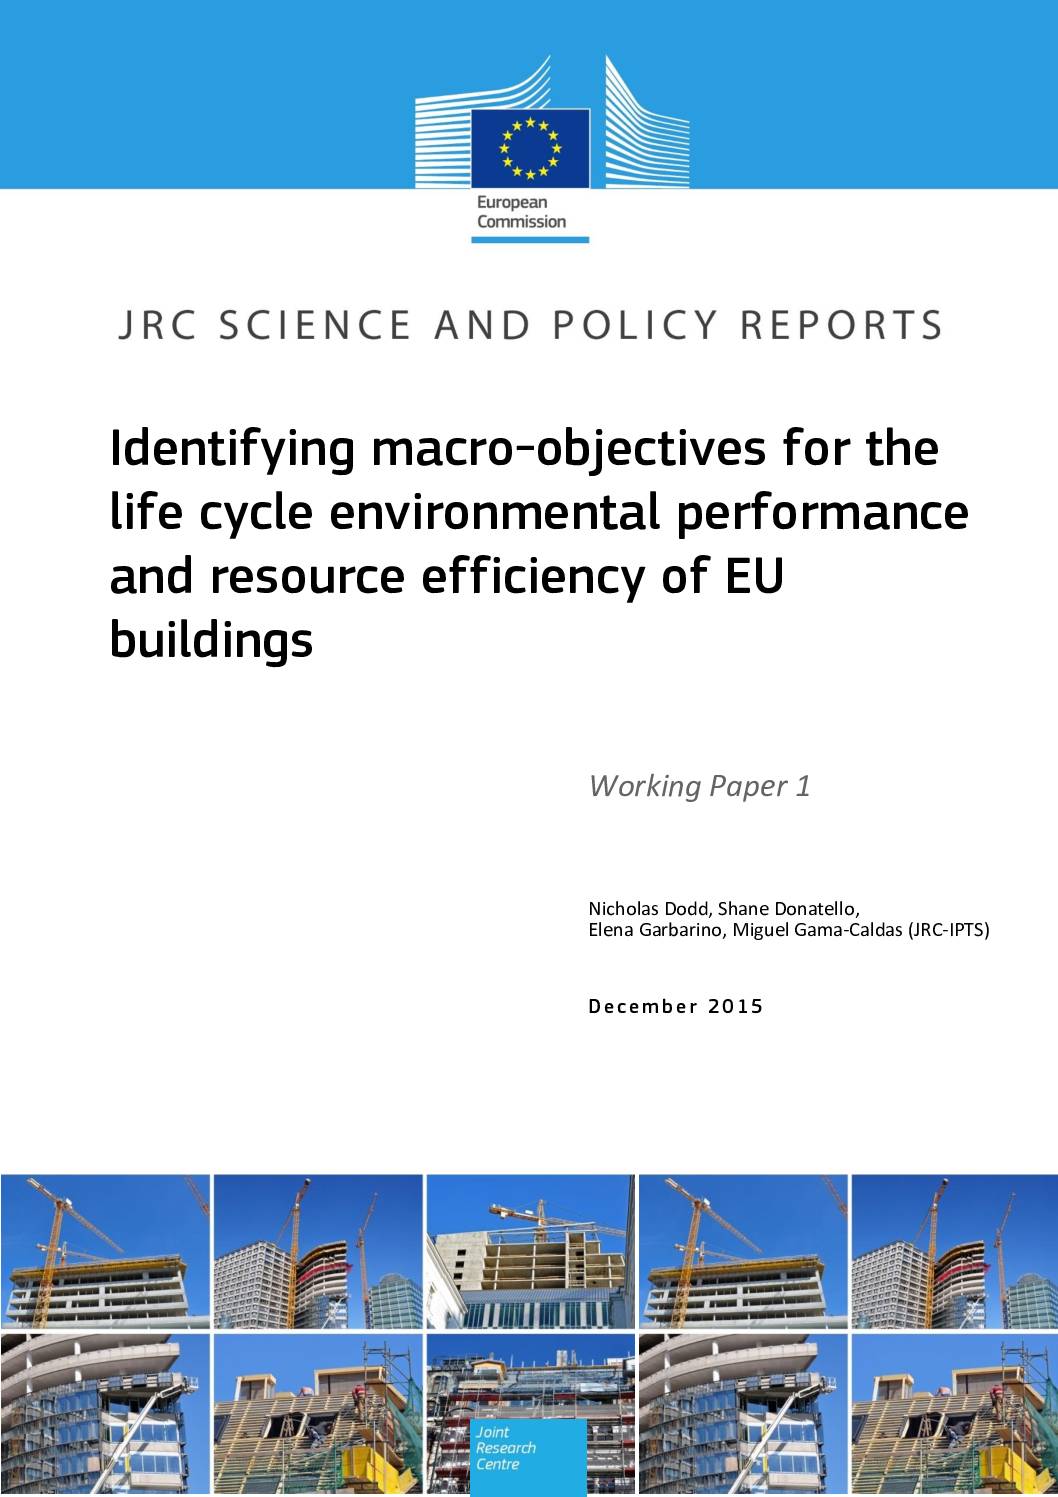 Life cycle environmental performance of EU buildings